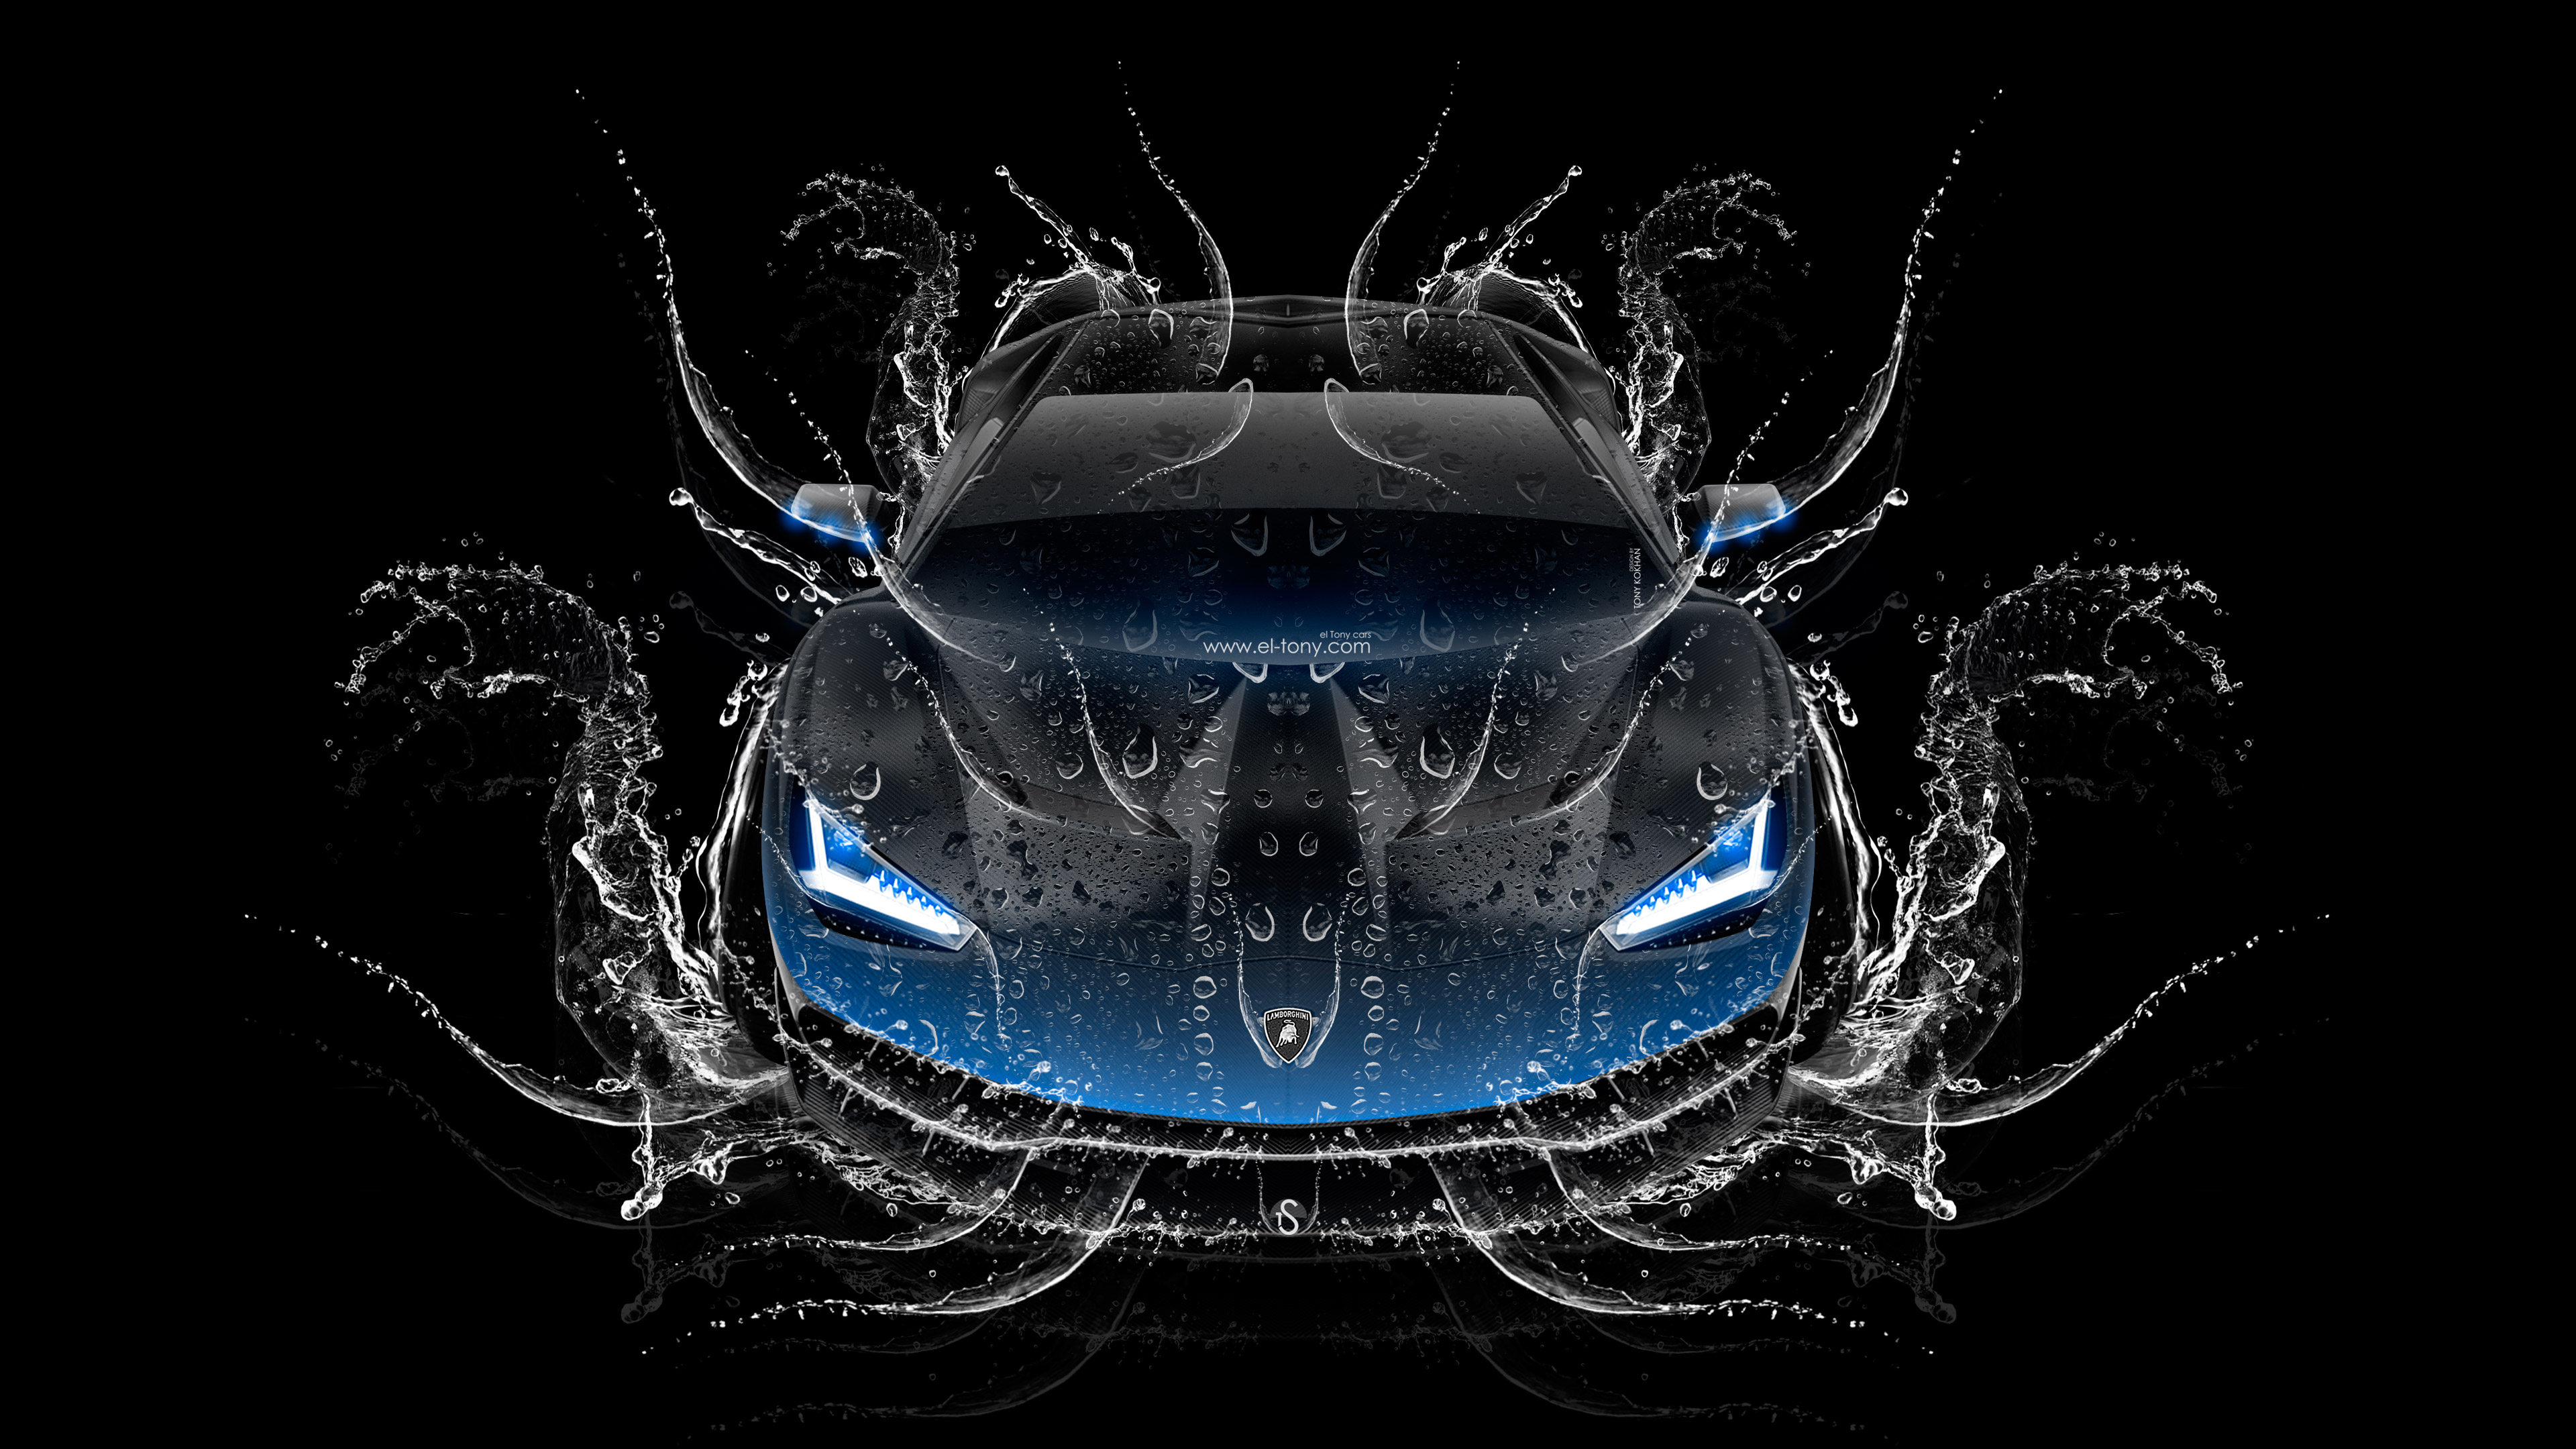 Lamborghini Centenario Frontup Super Water Car